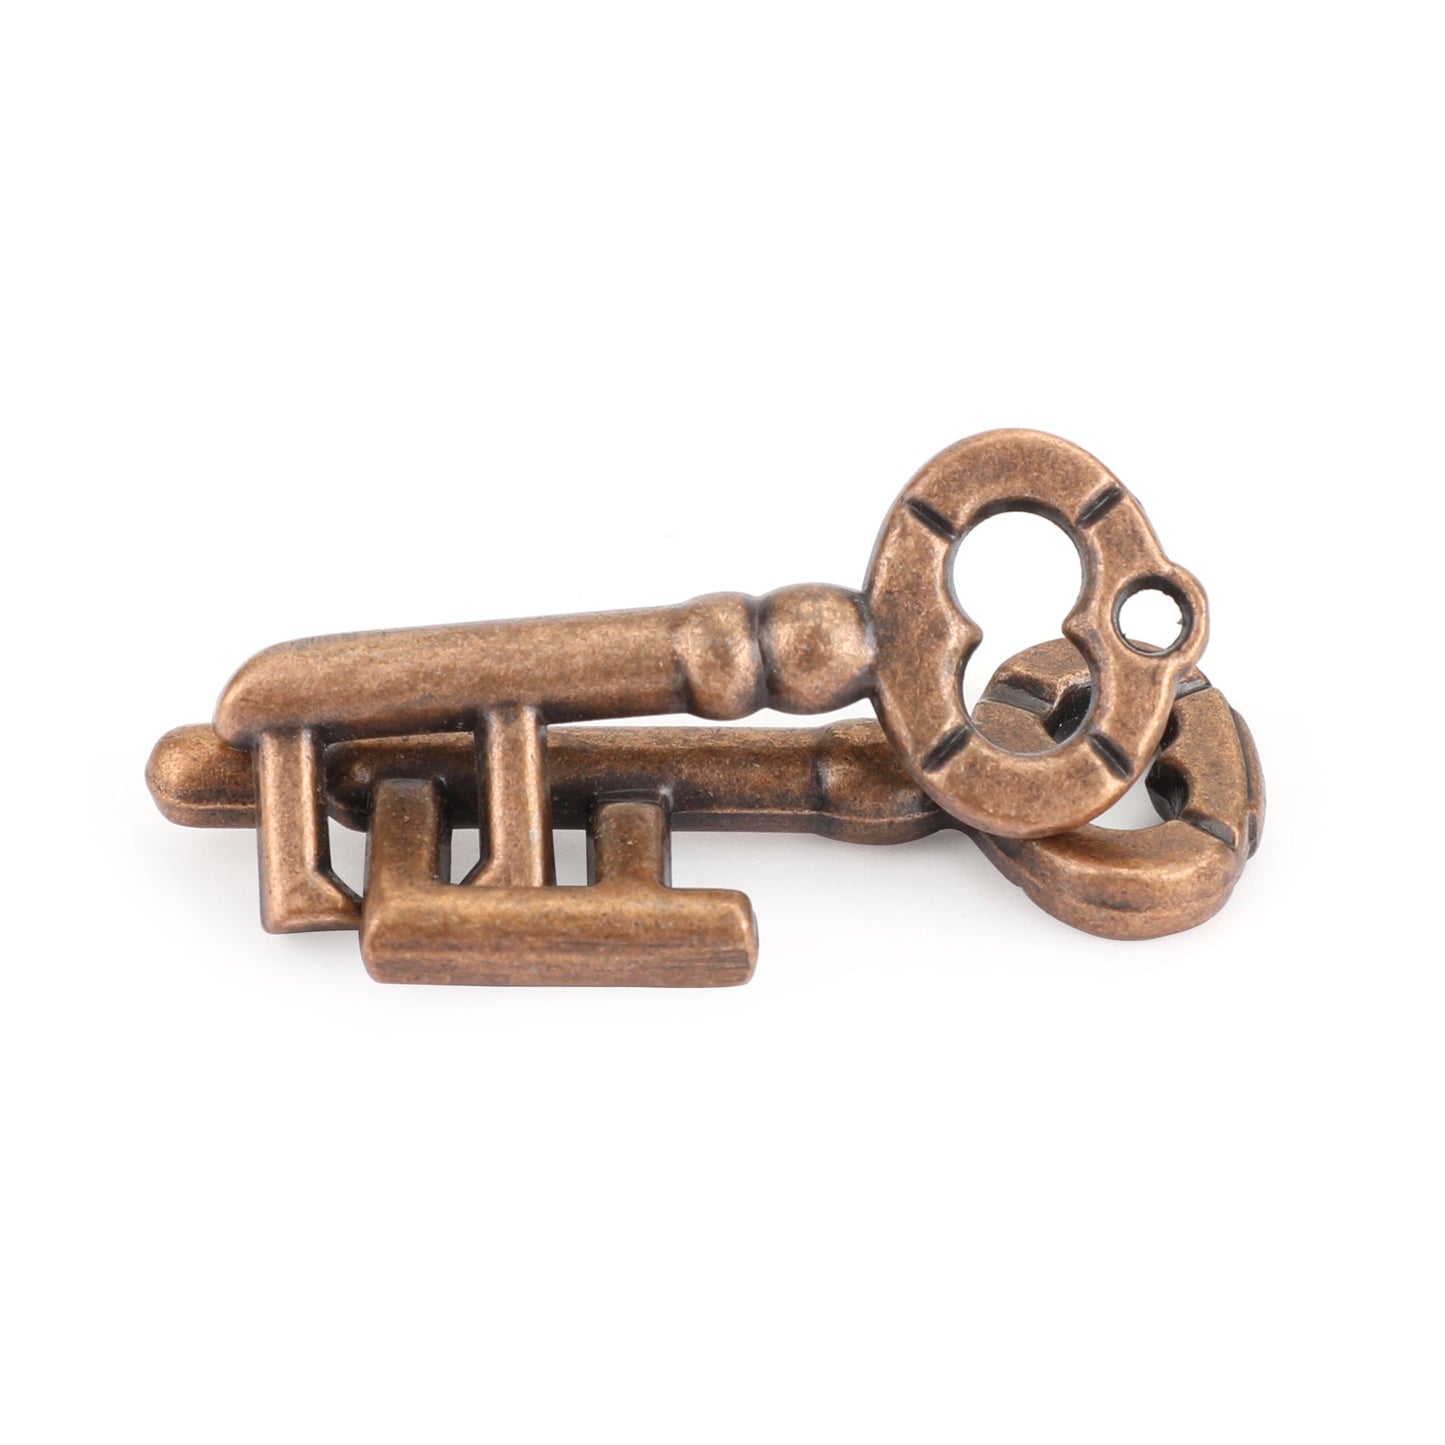 Vintage Alloy Cast IQ Mind Puzzle Box Brain Teaser Game Key Lock Metal Lock Toys